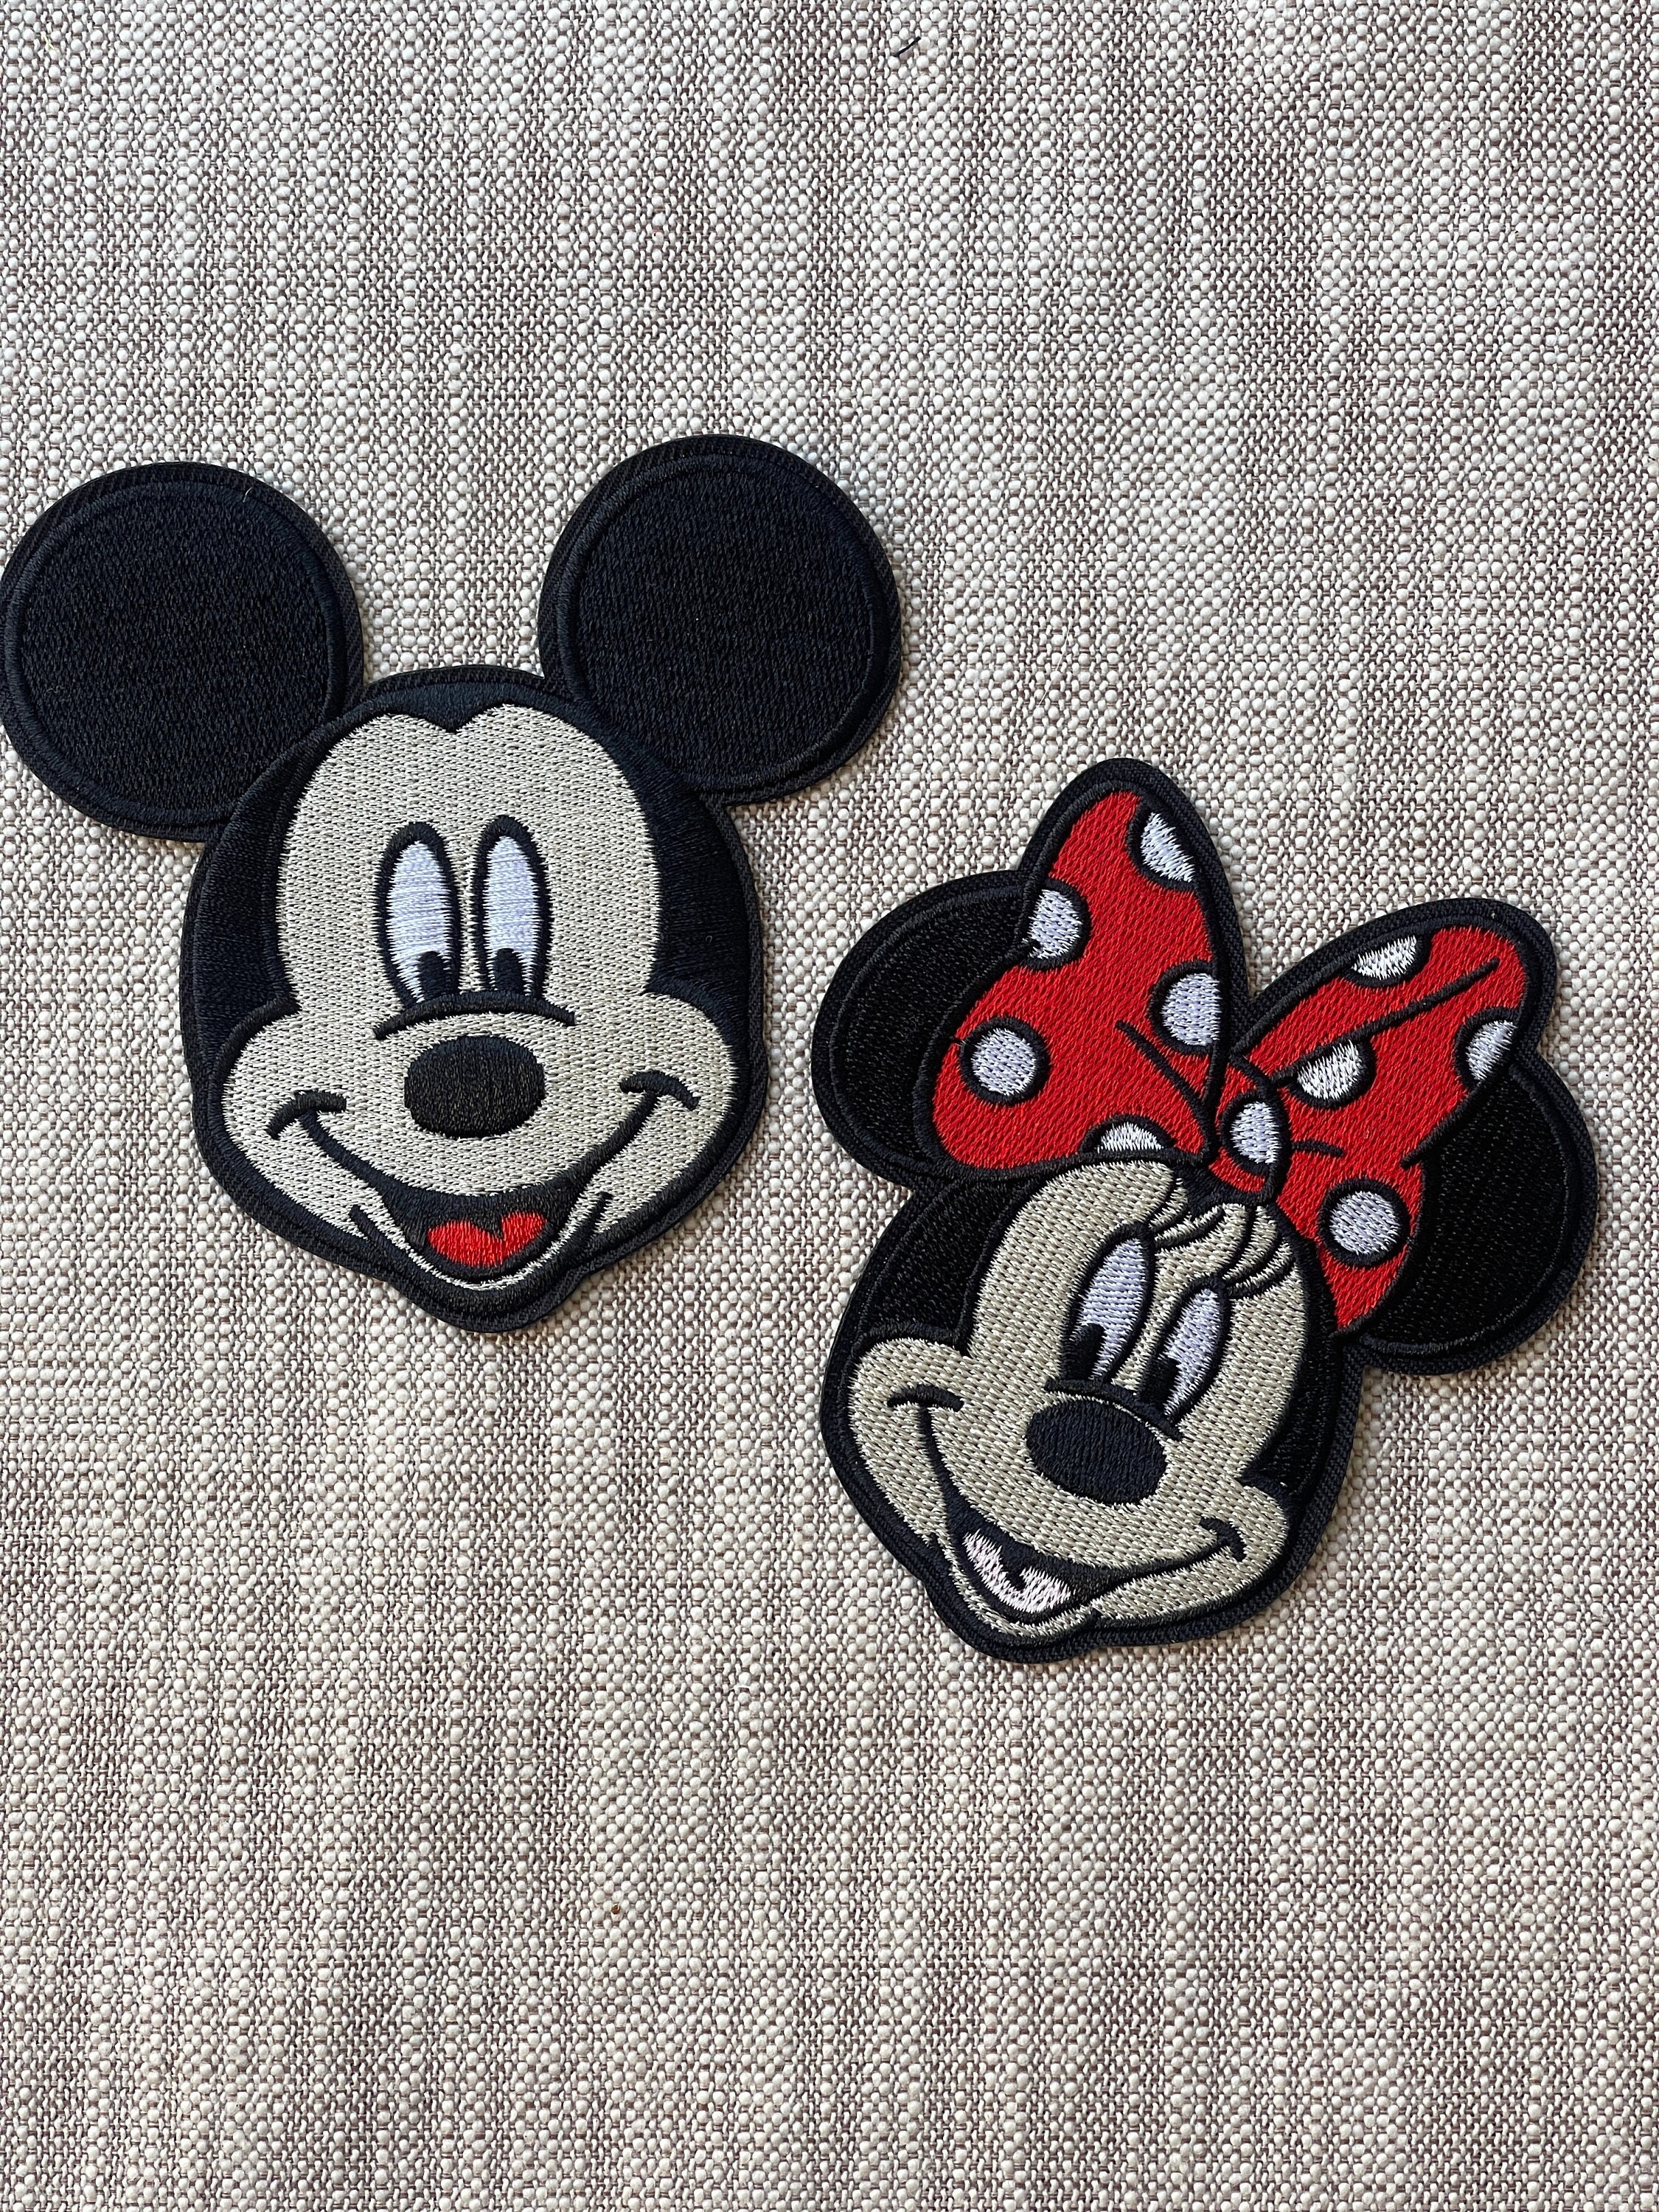 New Disney Minnie Mouse Iron-on Patch Appliqué